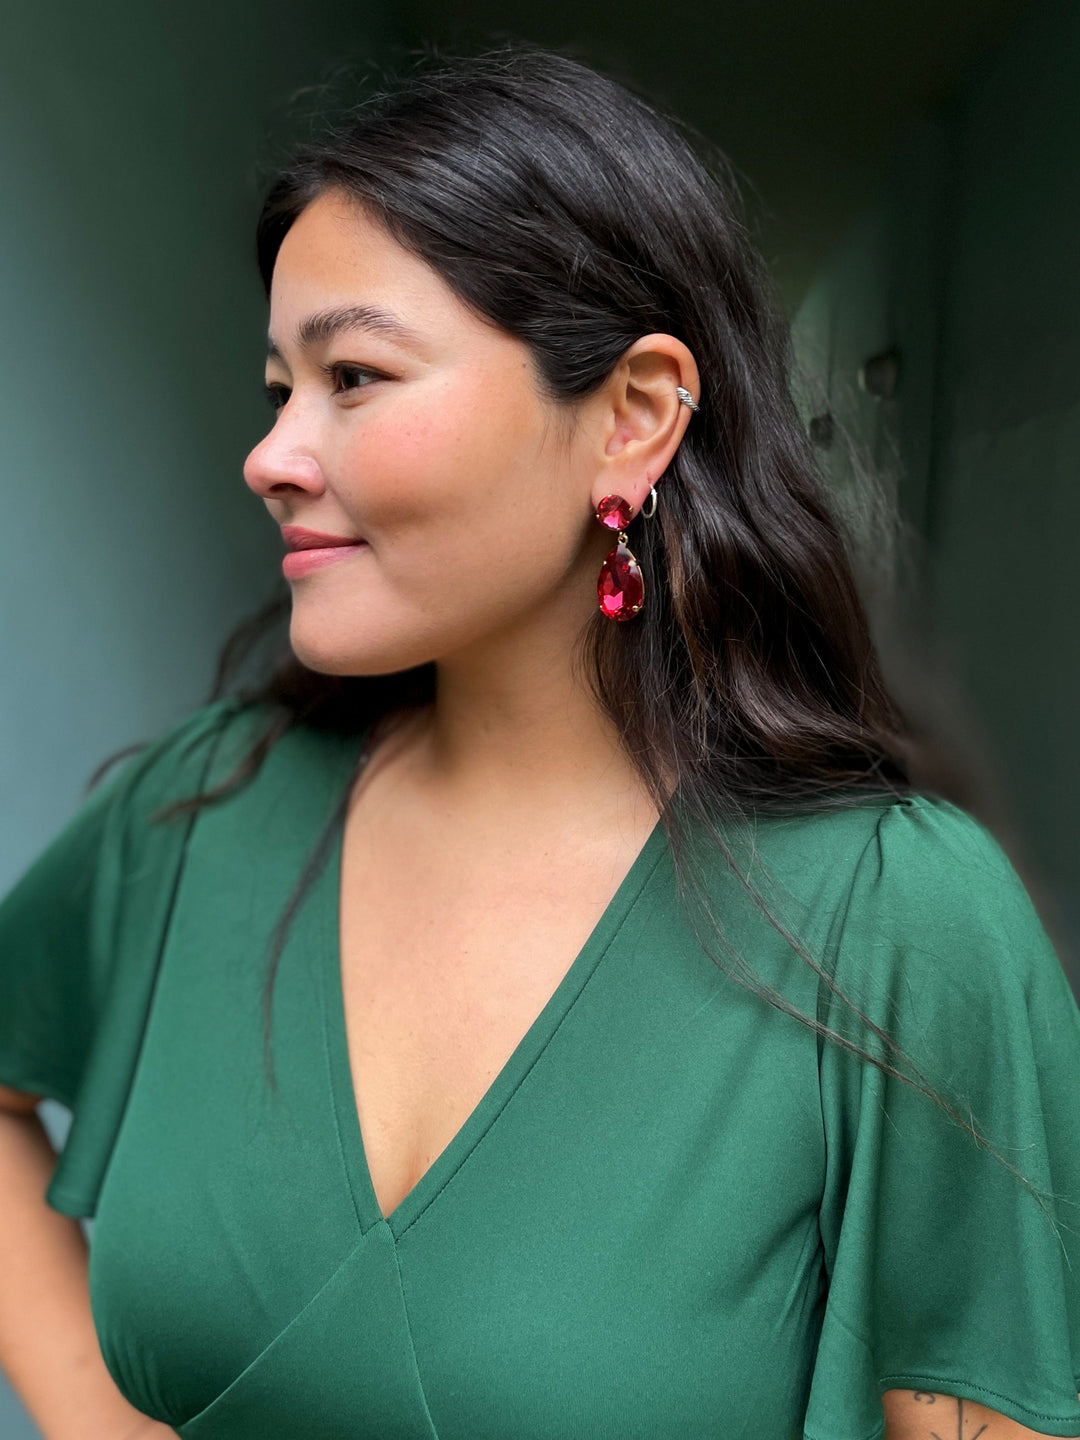 Caroline Svedbom øredobber Perfect drop earrings - mulberry red